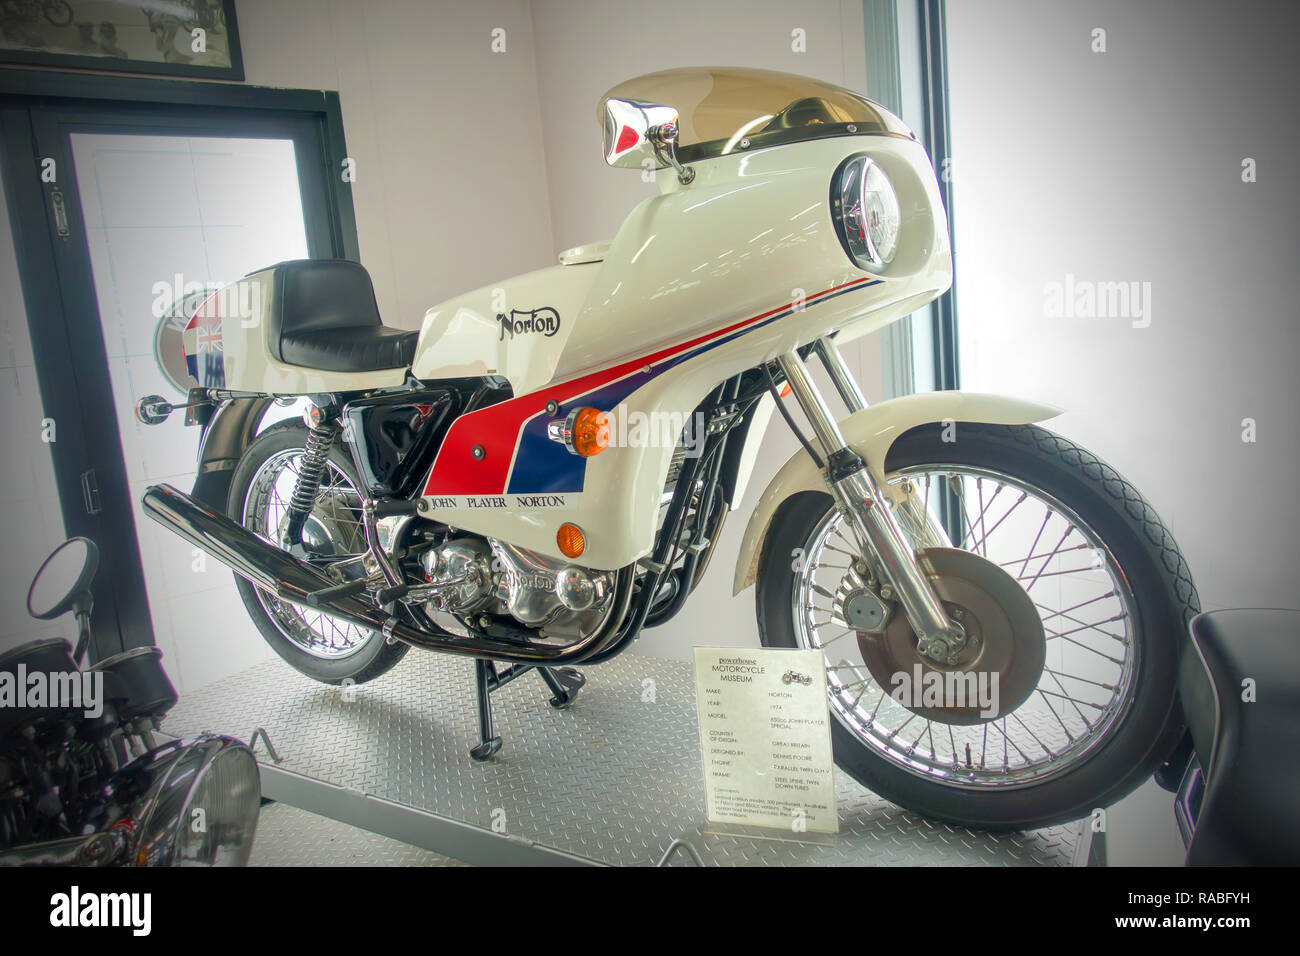 1974 Norton 850 cc John Player Special Limited Edition Motorrad auf Anzeige an das Powerhouse Museum, Tamworth Australien. Stockfoto